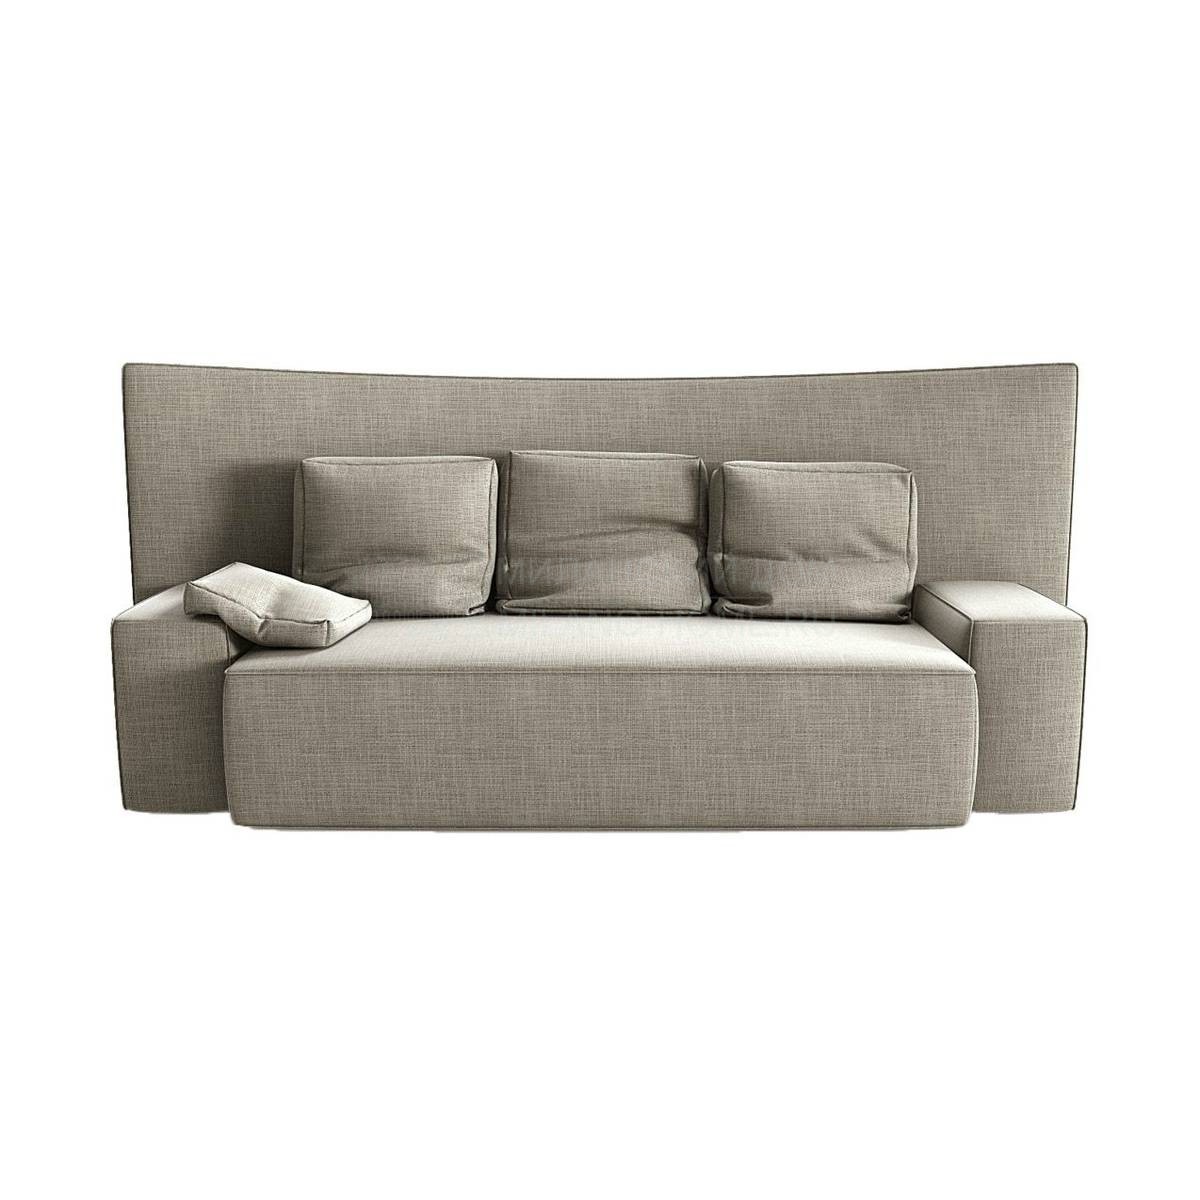 Прямой диван Wow divano из Италии фабрики DRIADE